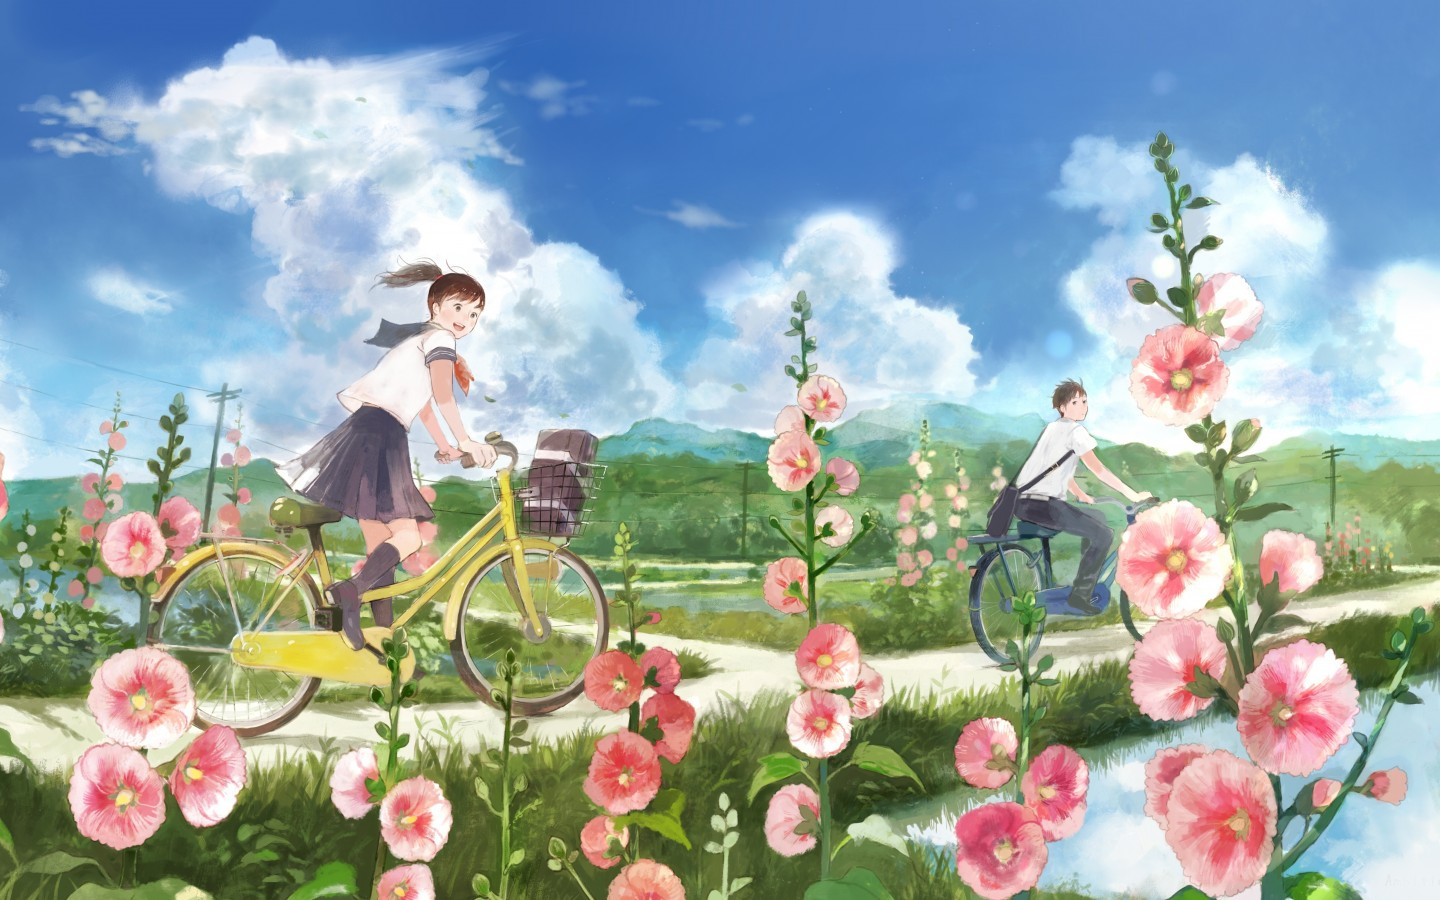 Download 1440x900 Anime Couple, Summer, Biking, School Uniform, Flowers, Clouds, Scenic, Landscape Wallpaper for MacBook Pro 15 inch, MacBook Air 13 inch